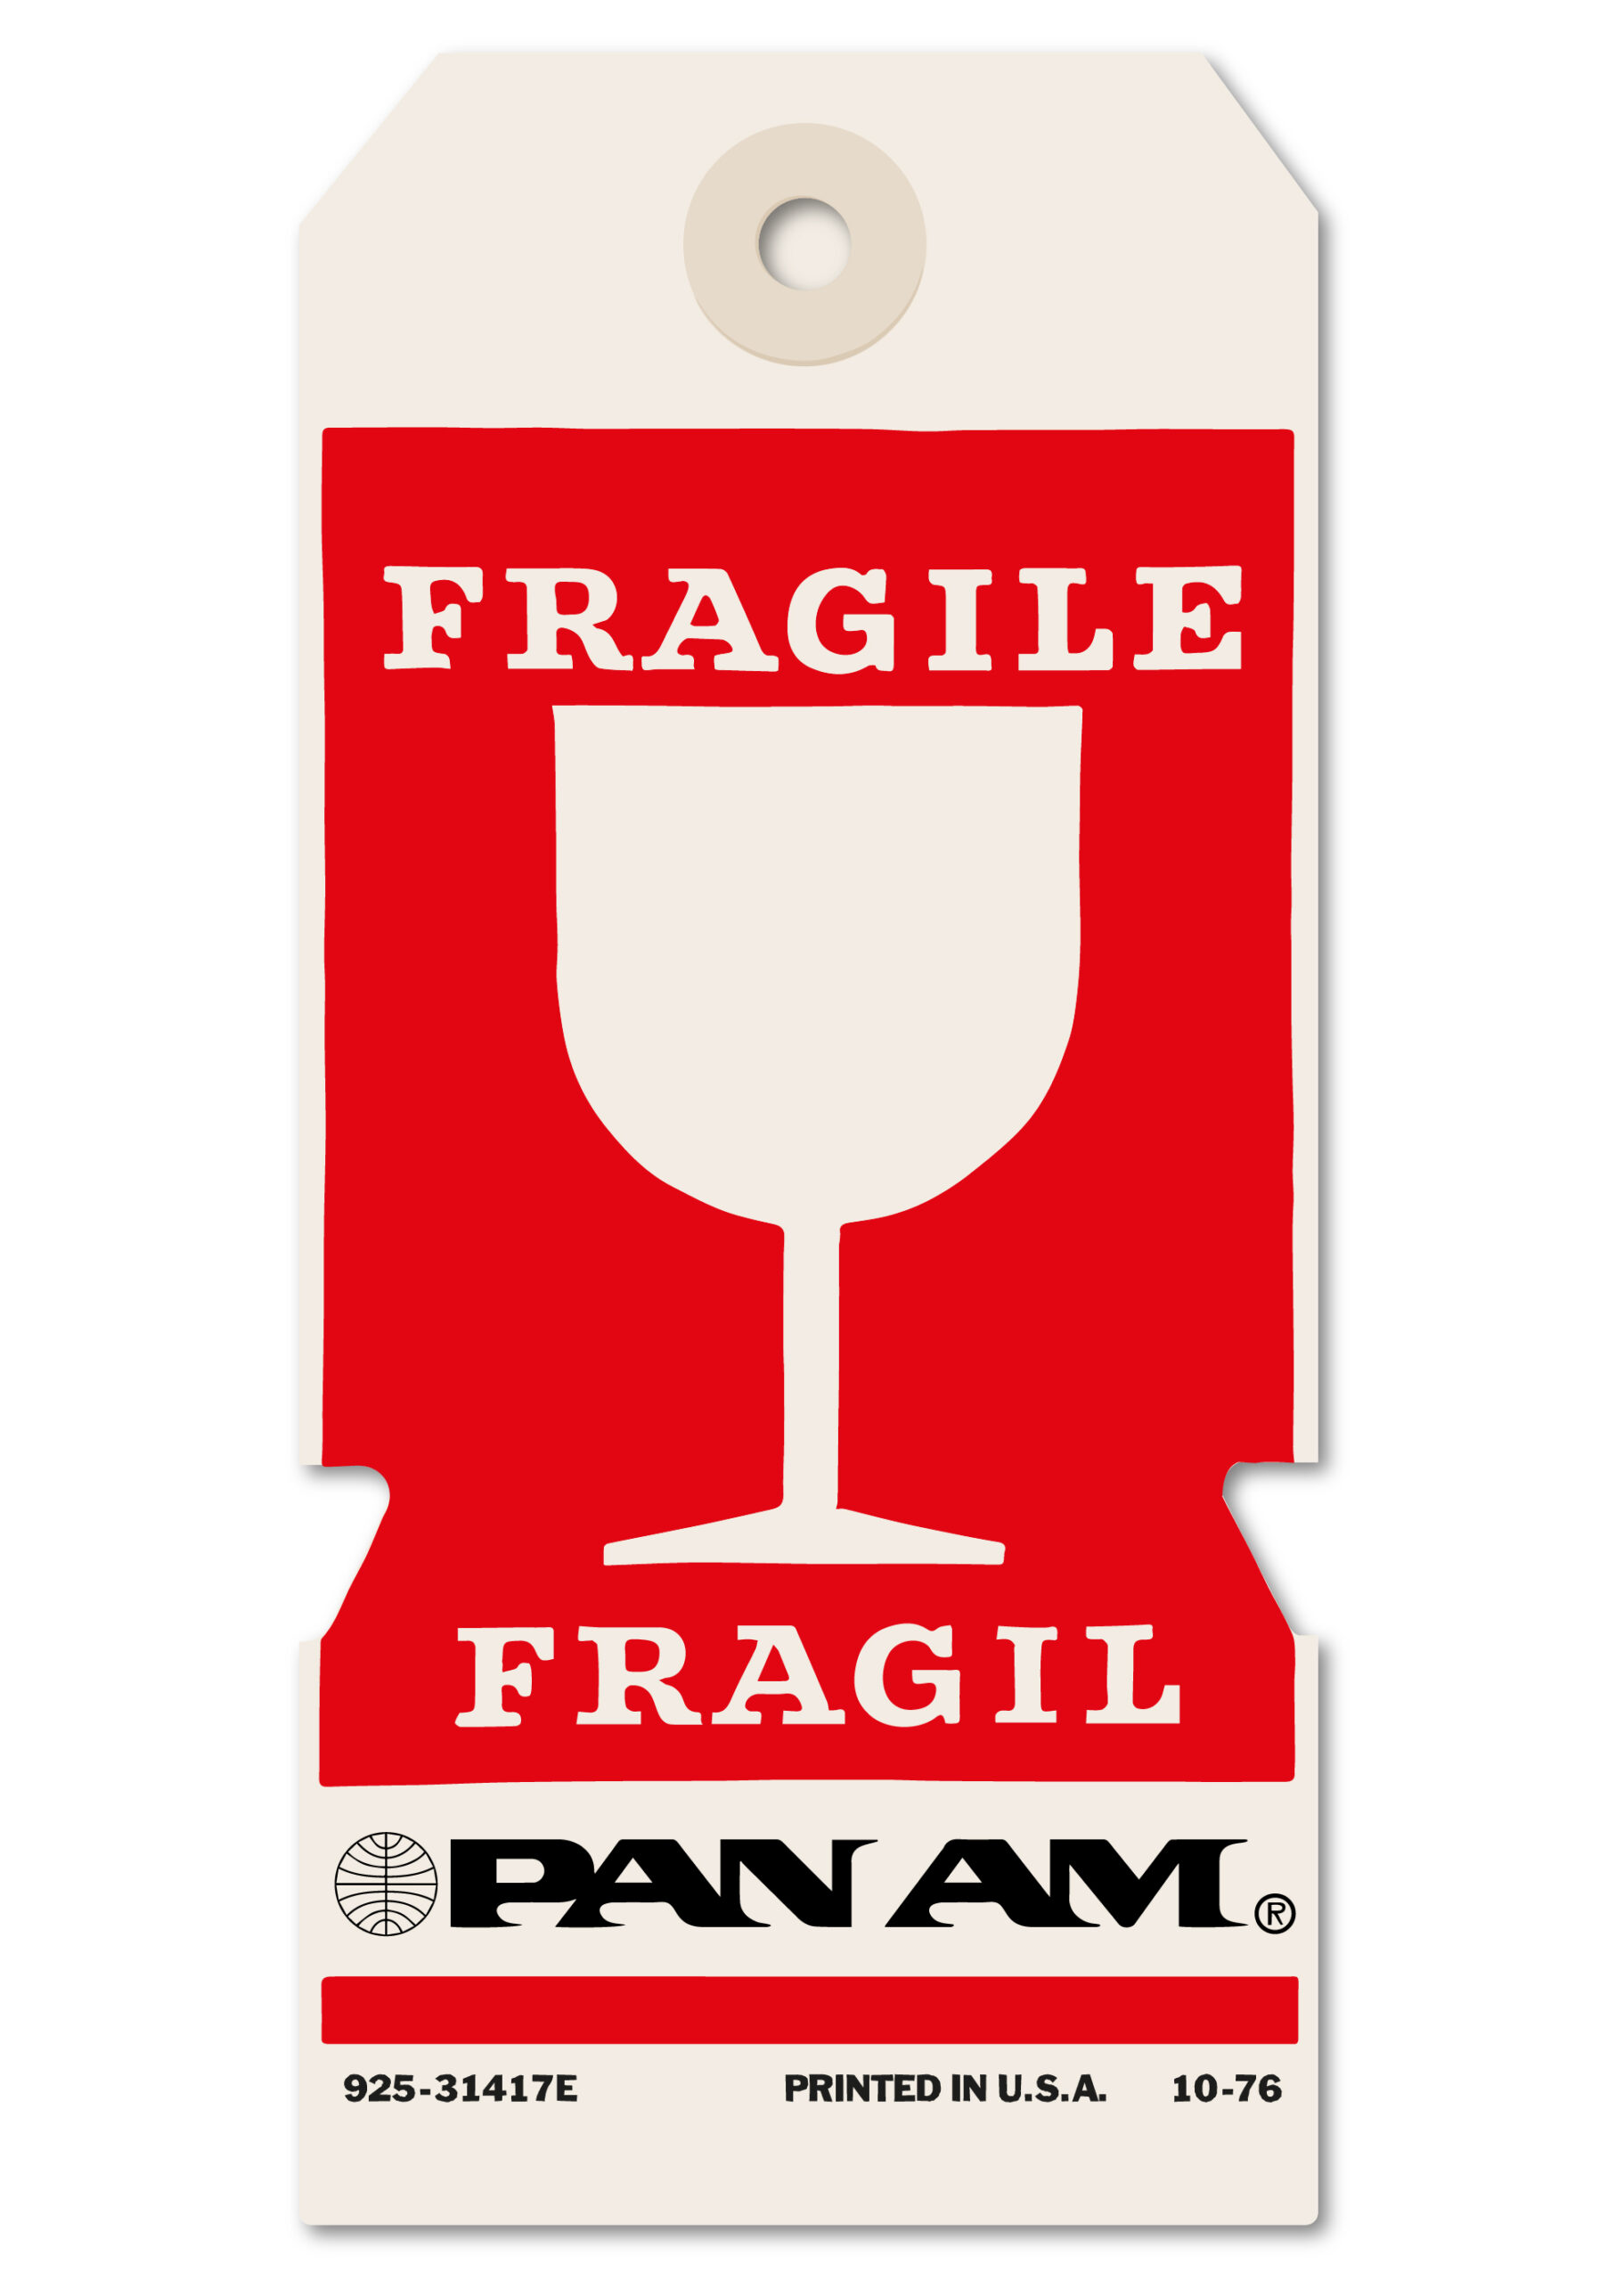 Fragile Pan Am Luggage label